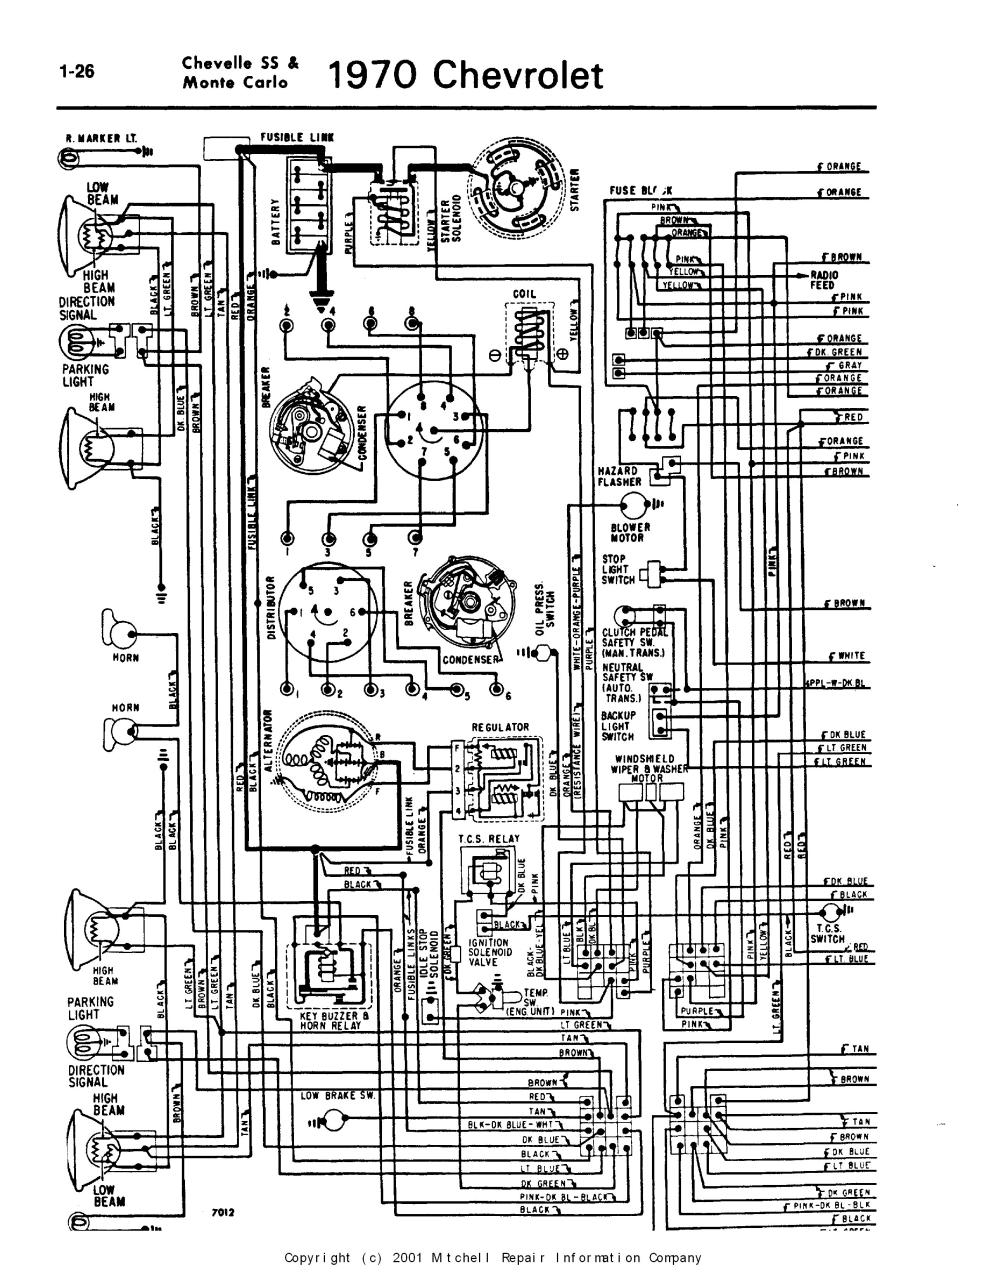 Capacitor Start Capacitor Run Motor Wiring Diagram